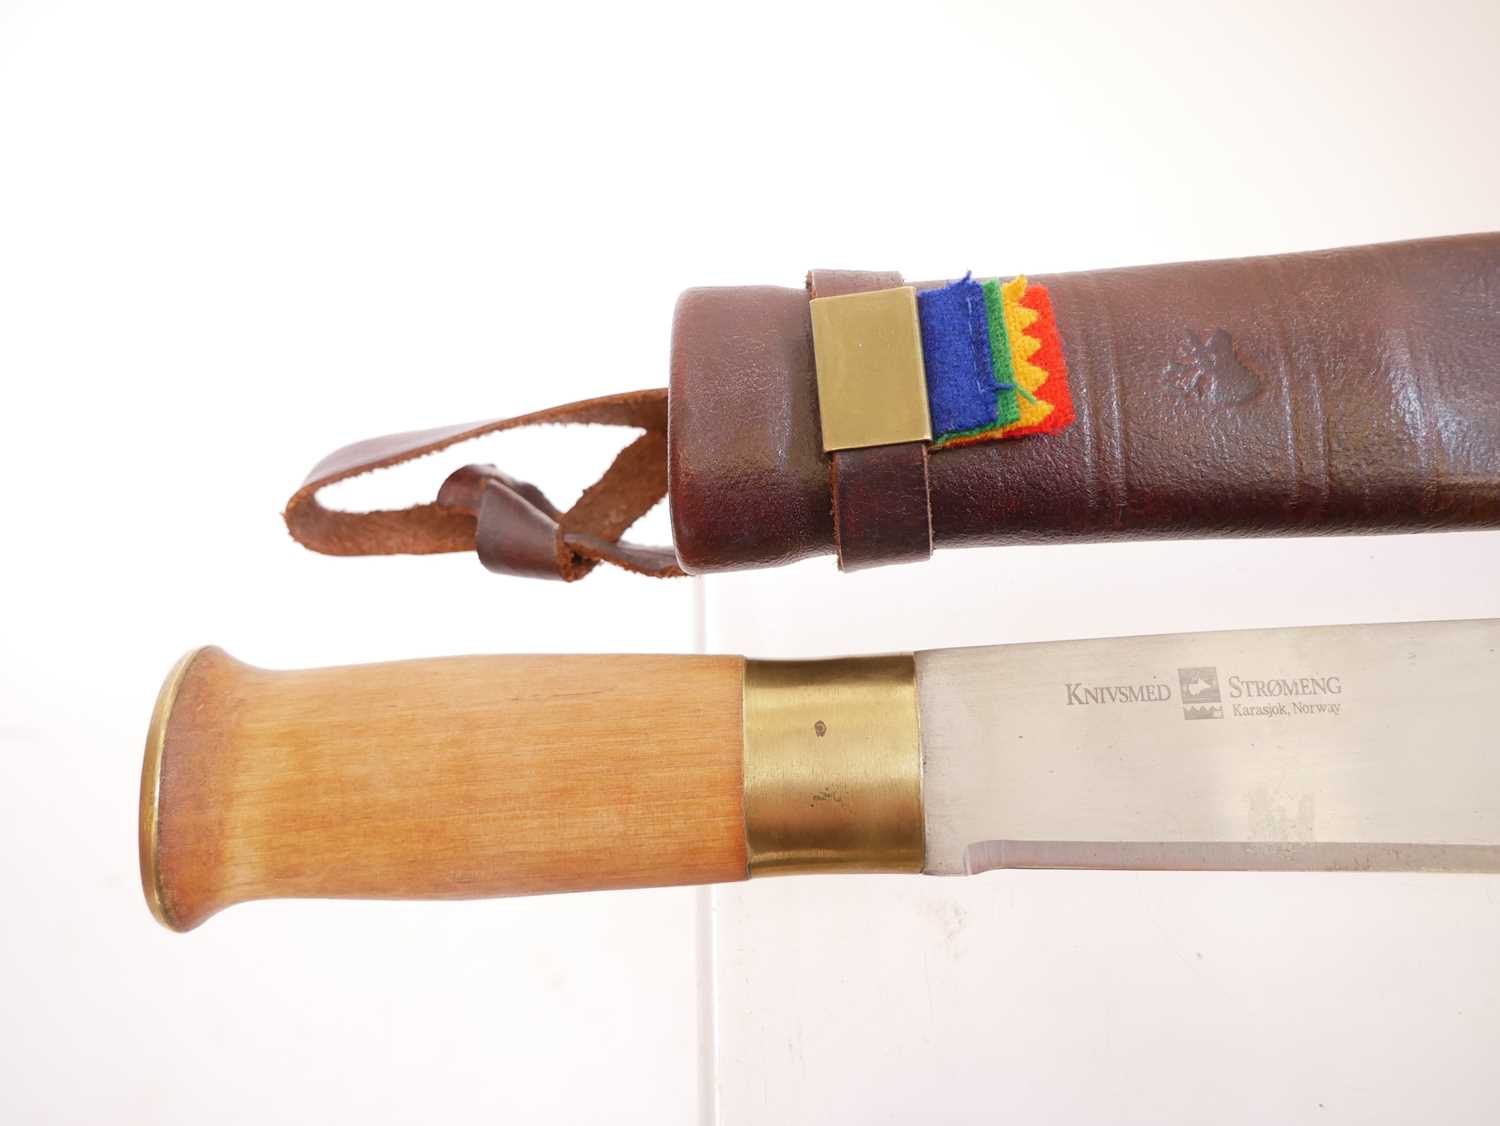 Knivsmed hunting knife, 9inch blade marked 'Knivsmed Stromeng Karasjok, Norway' with leather - Image 6 of 7